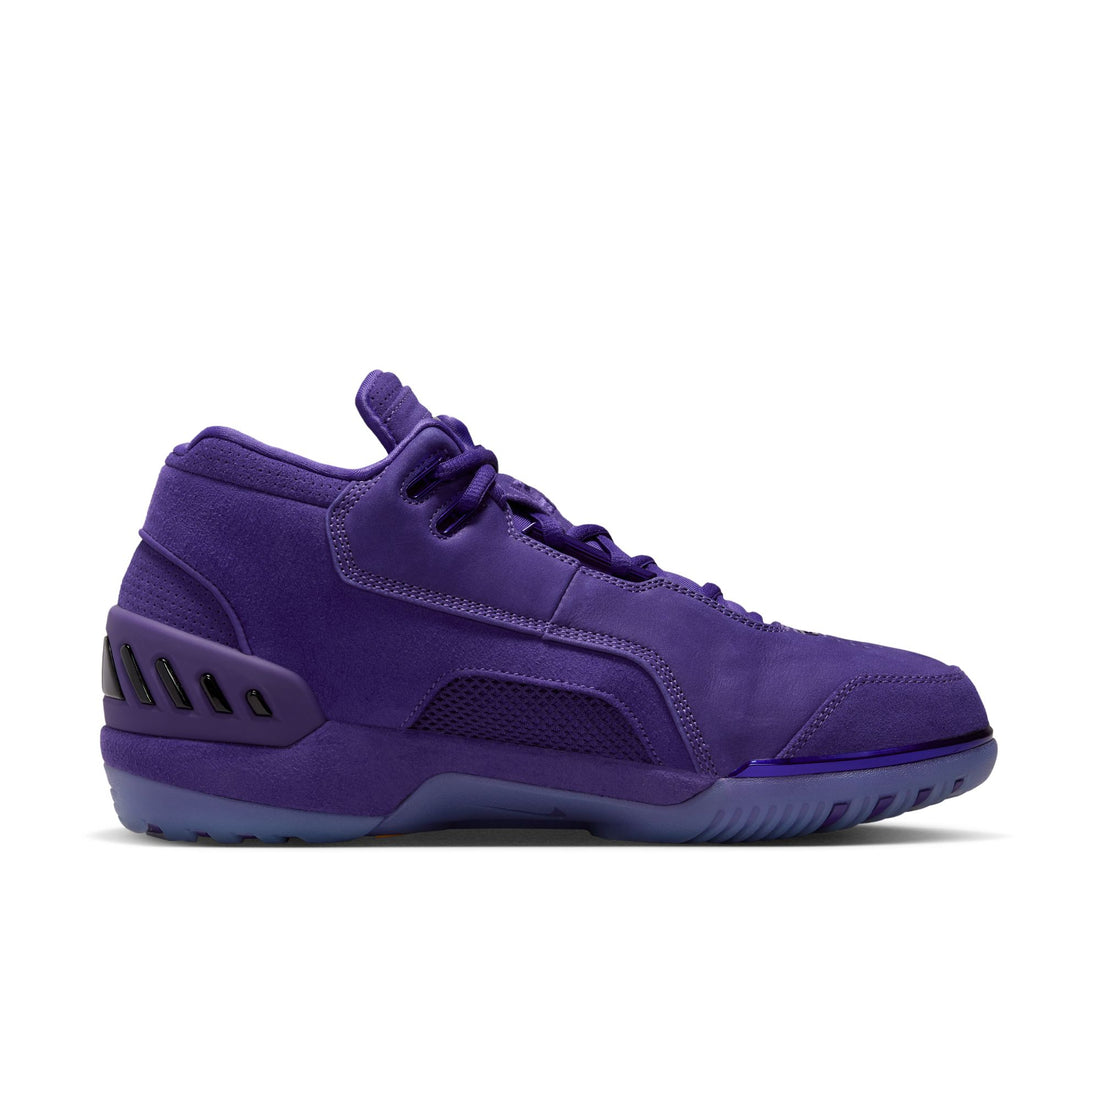 Air Zoom Generation "Court Purple"